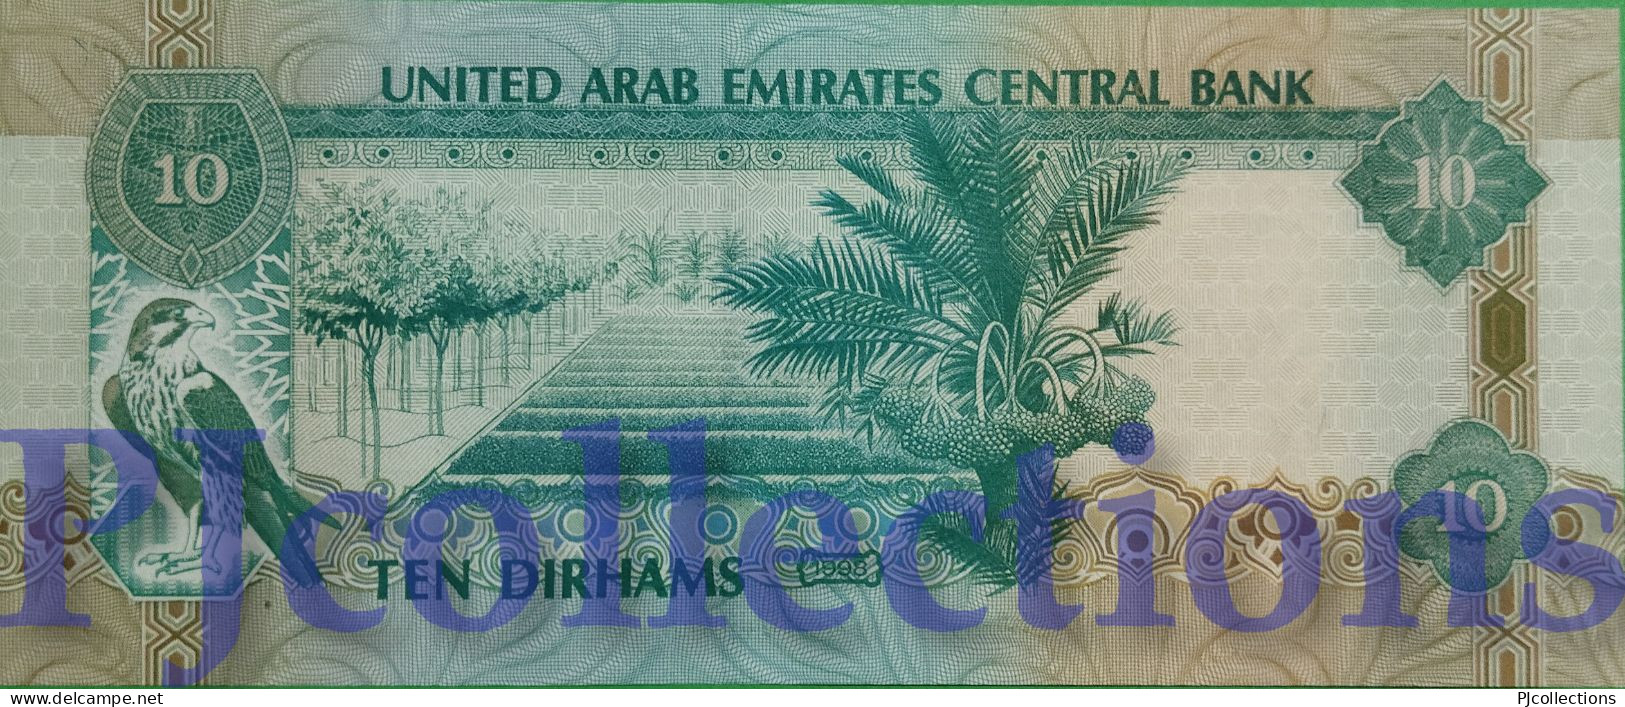 UNITED ARAB EMIRATES 10 DIRHAMS 1998 PICK 20a AU/UNC - Verenigde Arabische Emiraten